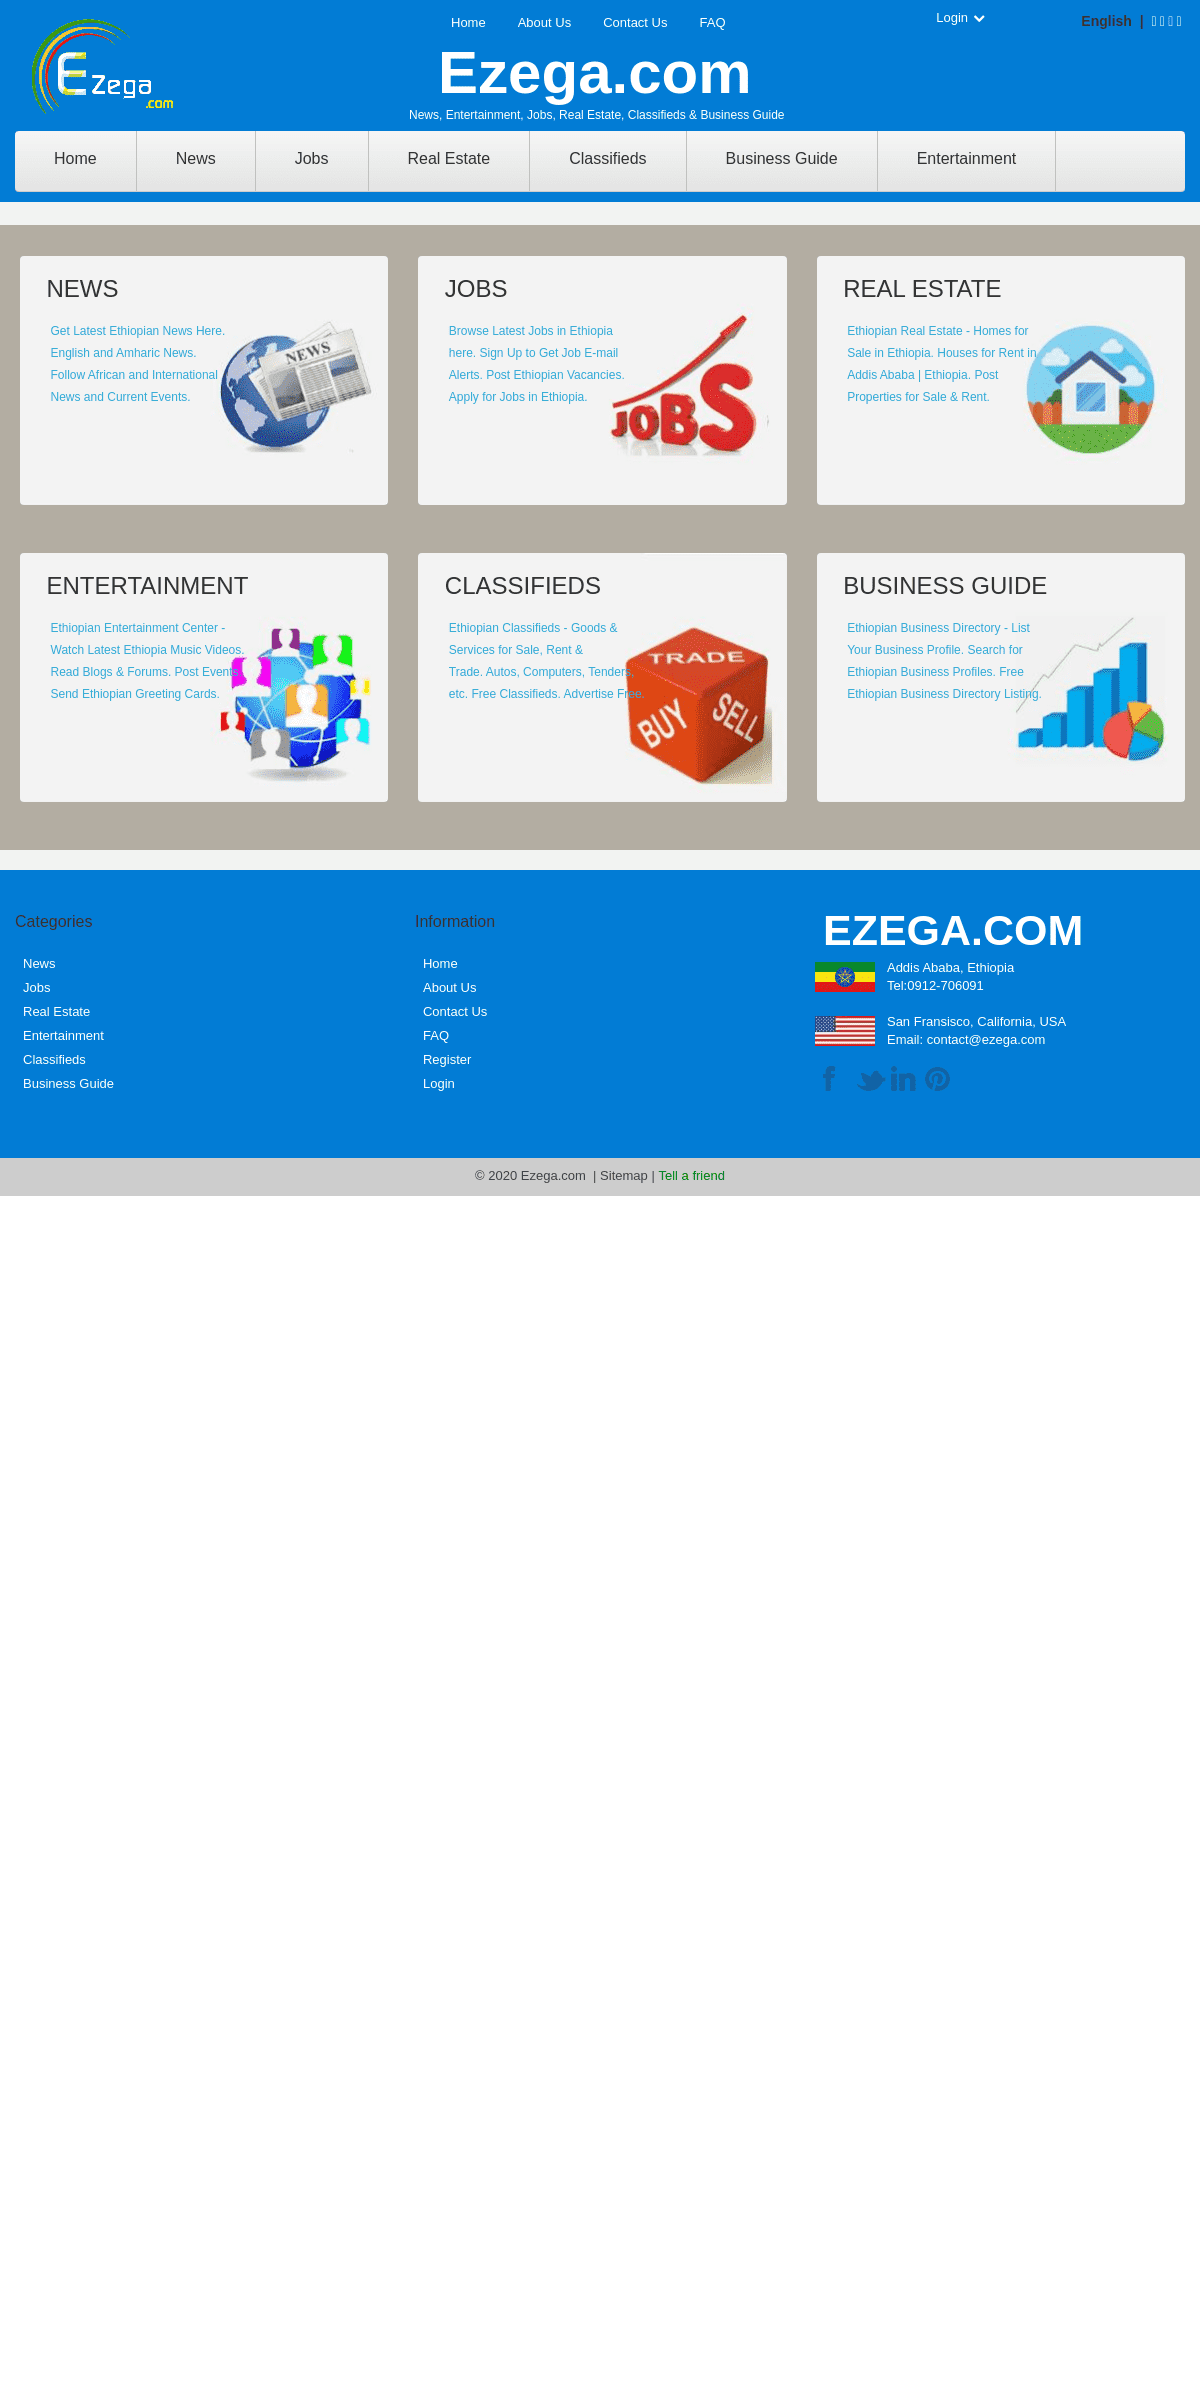 A complete backup of ezega.com